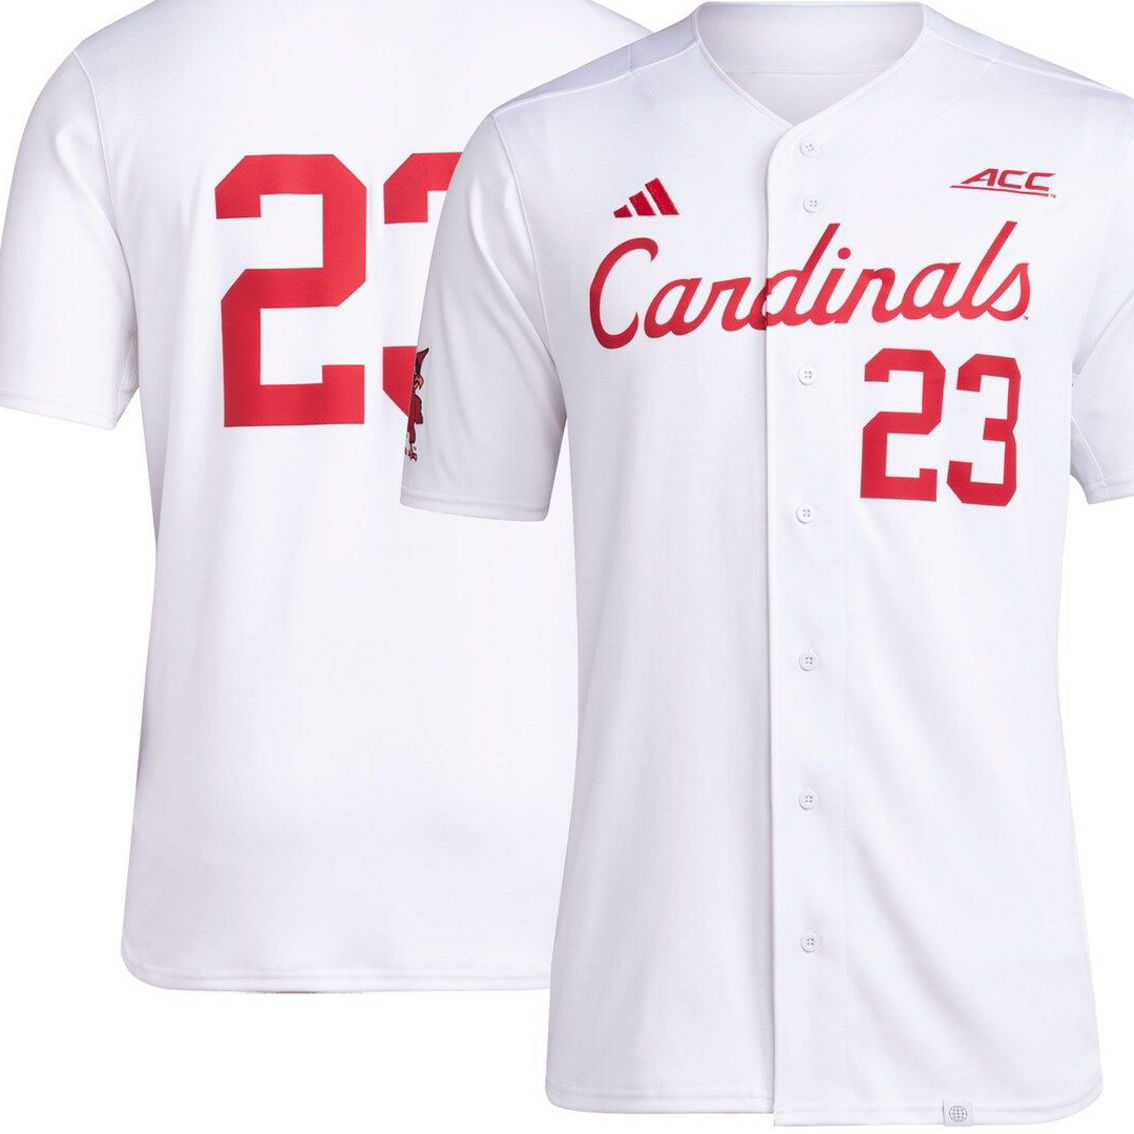 Men's Adidas White Louisville Cardinals Team Baseball Jersey